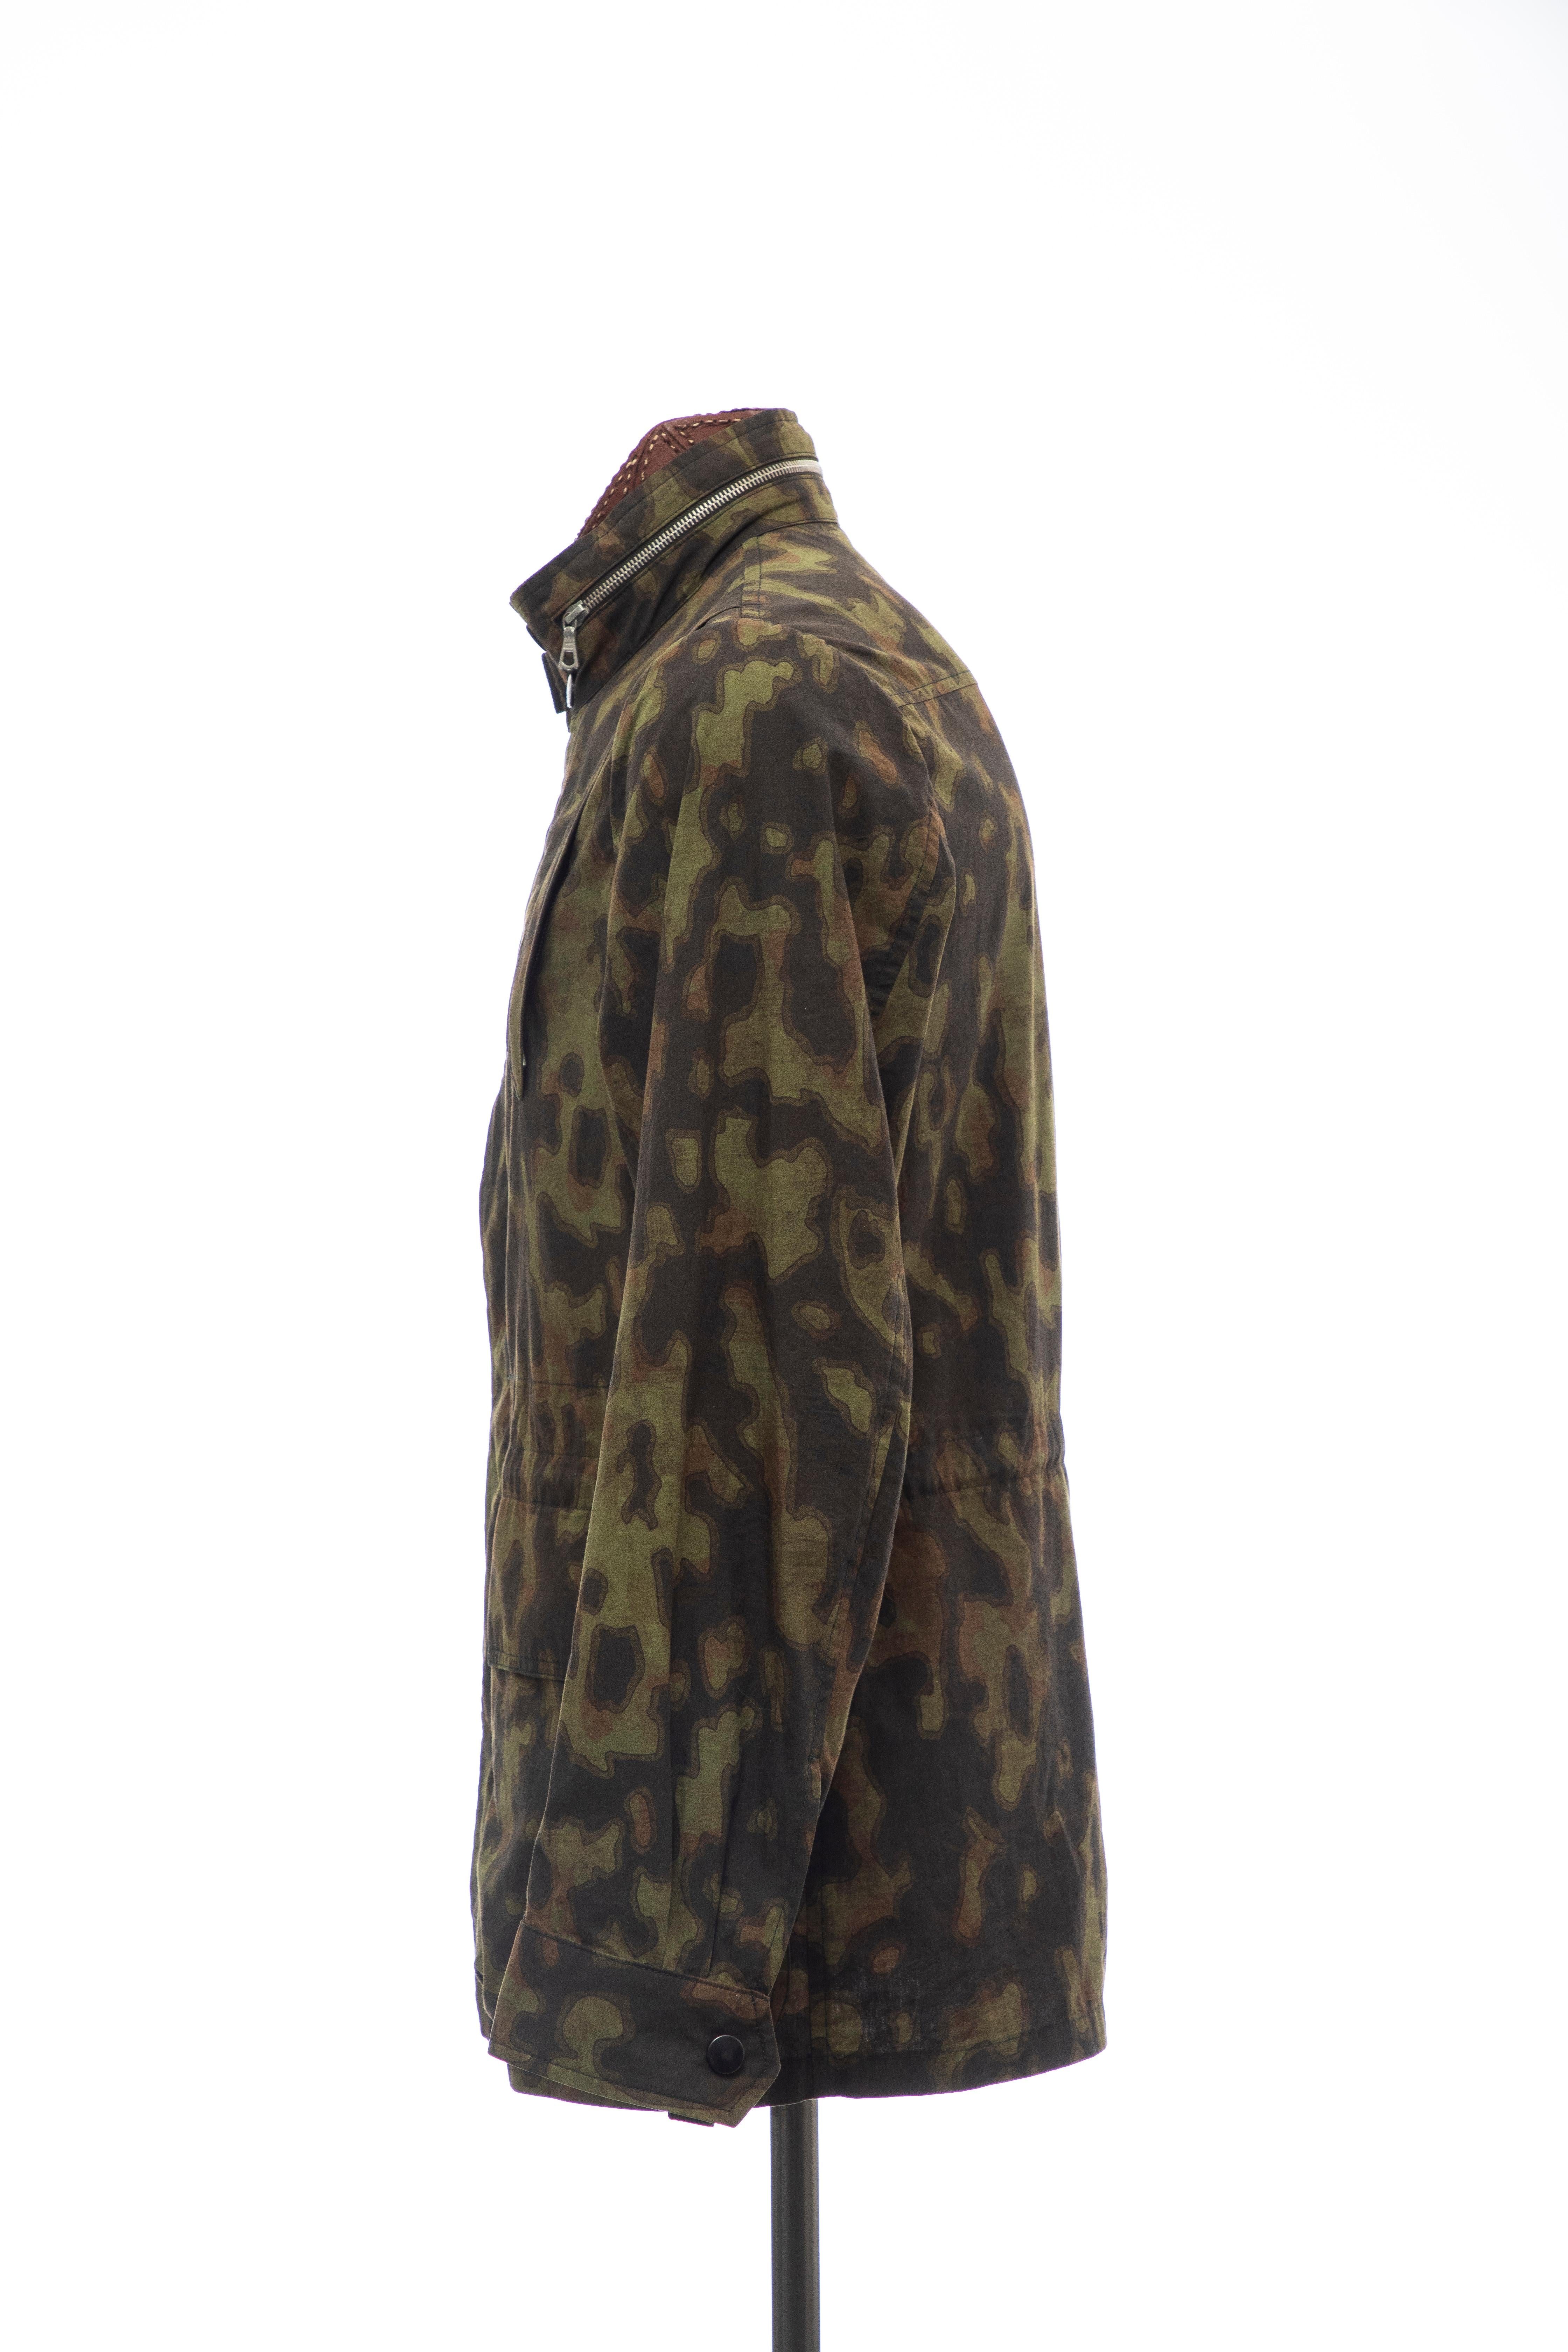 Dries Van Noten Men's Cotton Camouflage Jacket, Spring 2013 For Sale 2